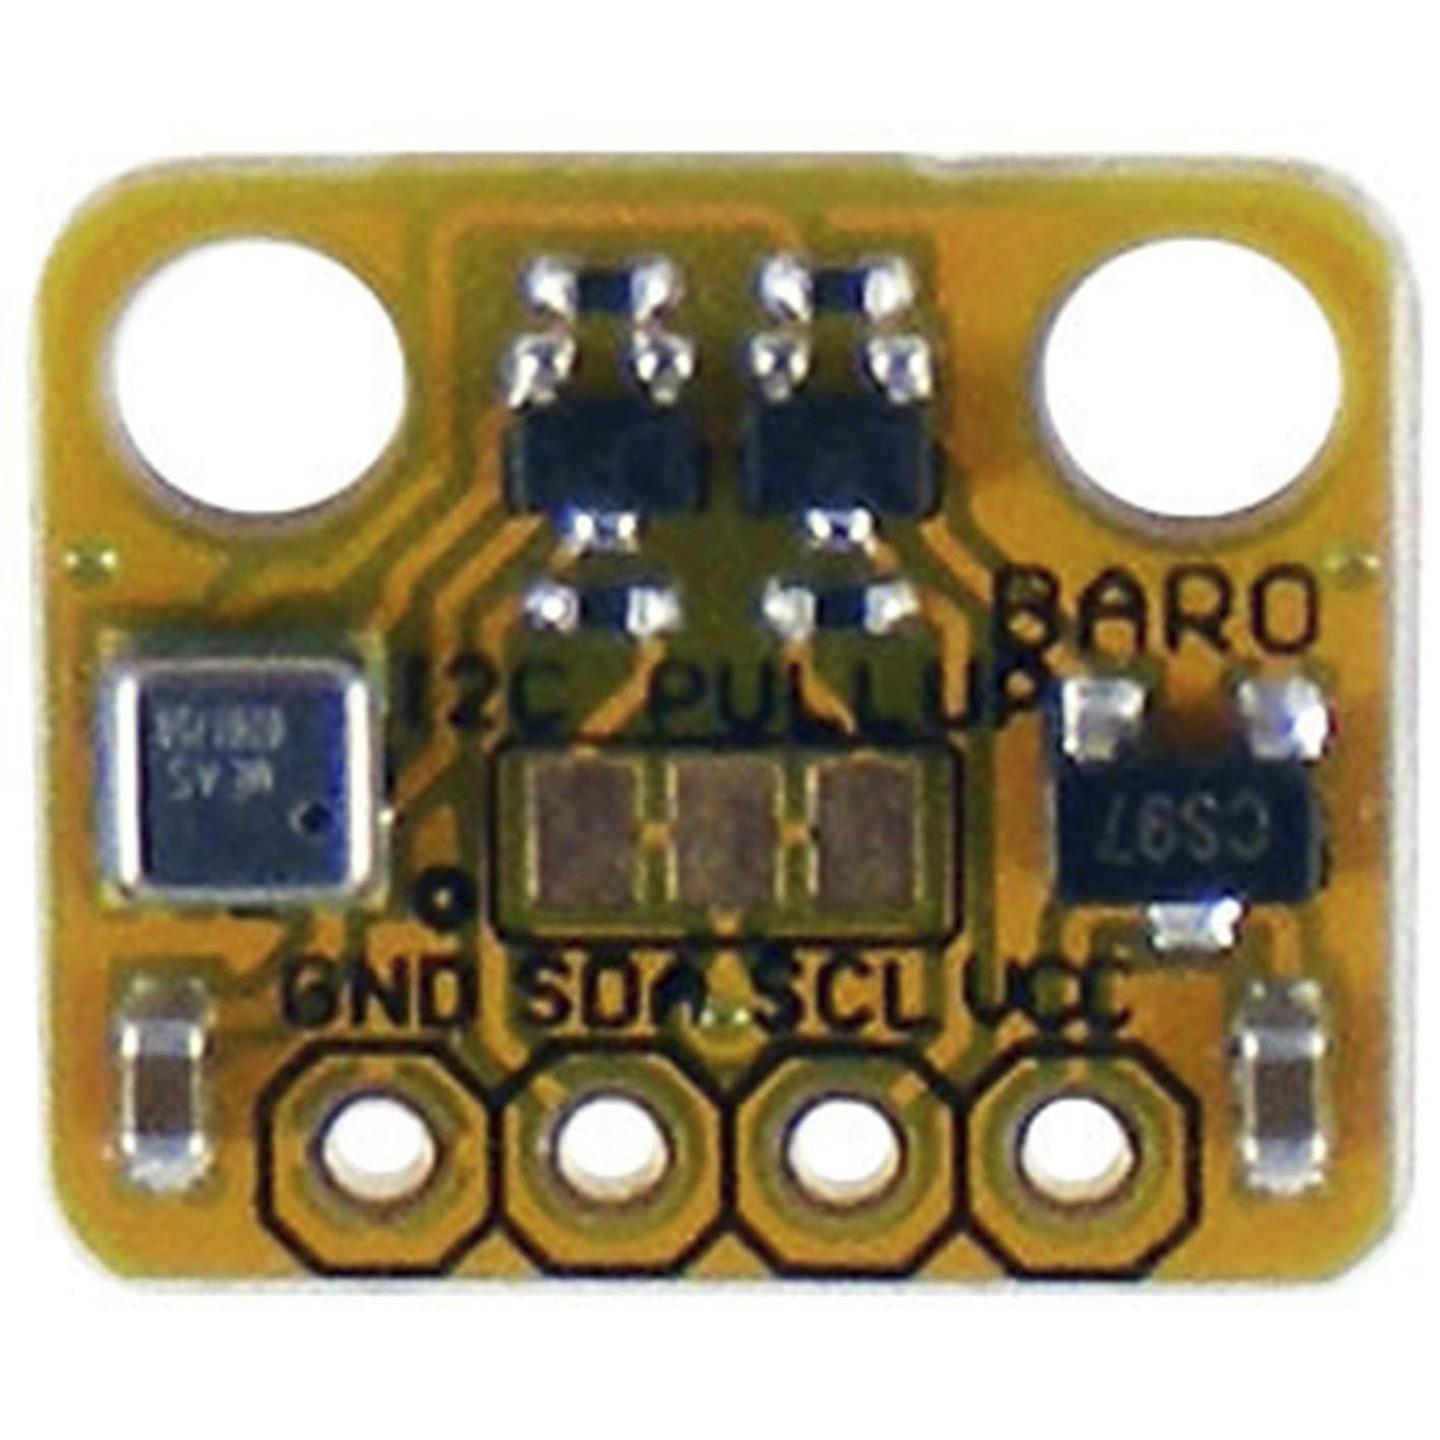 Barometric Pressure Sensor for Arduino